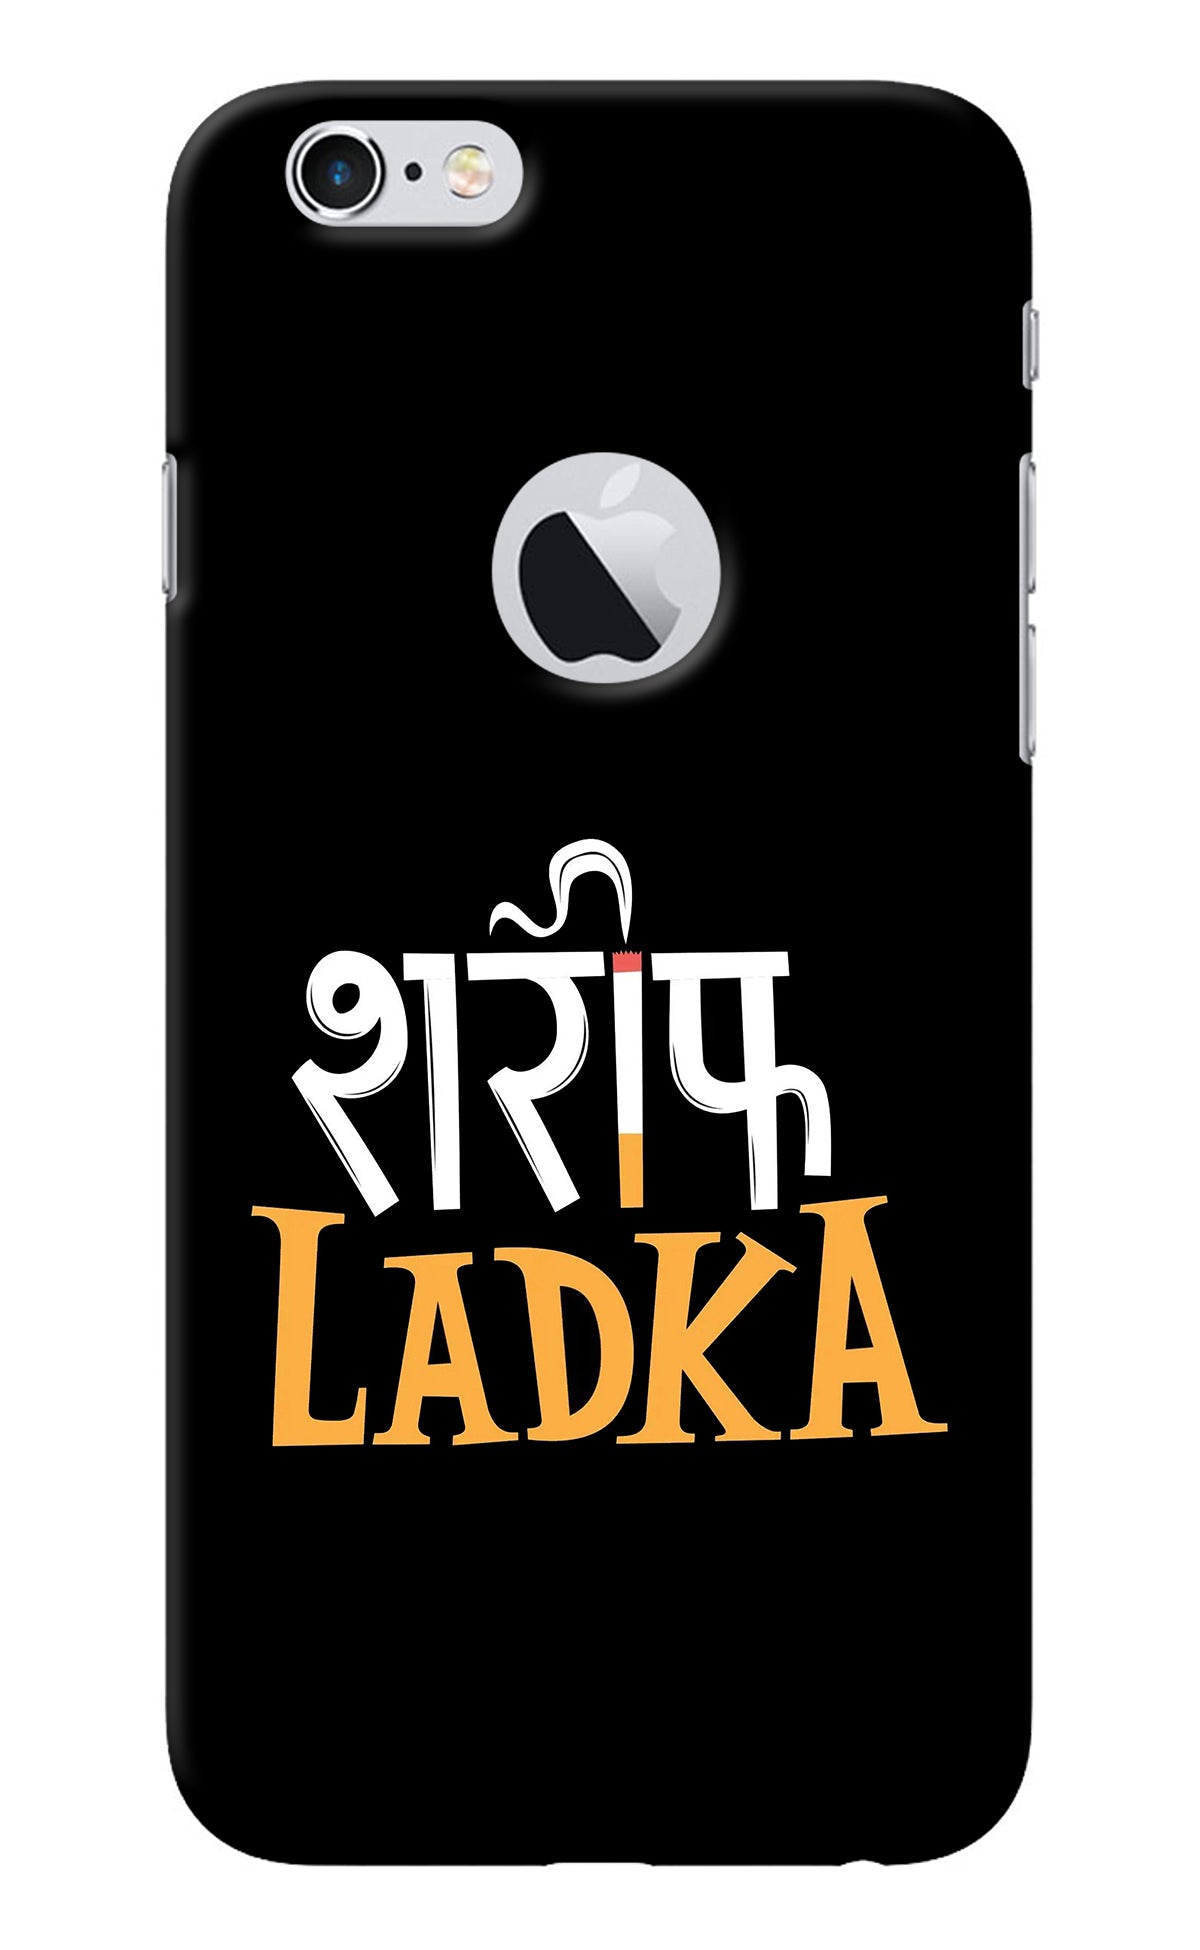 Shareef Ladka iPhone 6 Logocut Back Cover